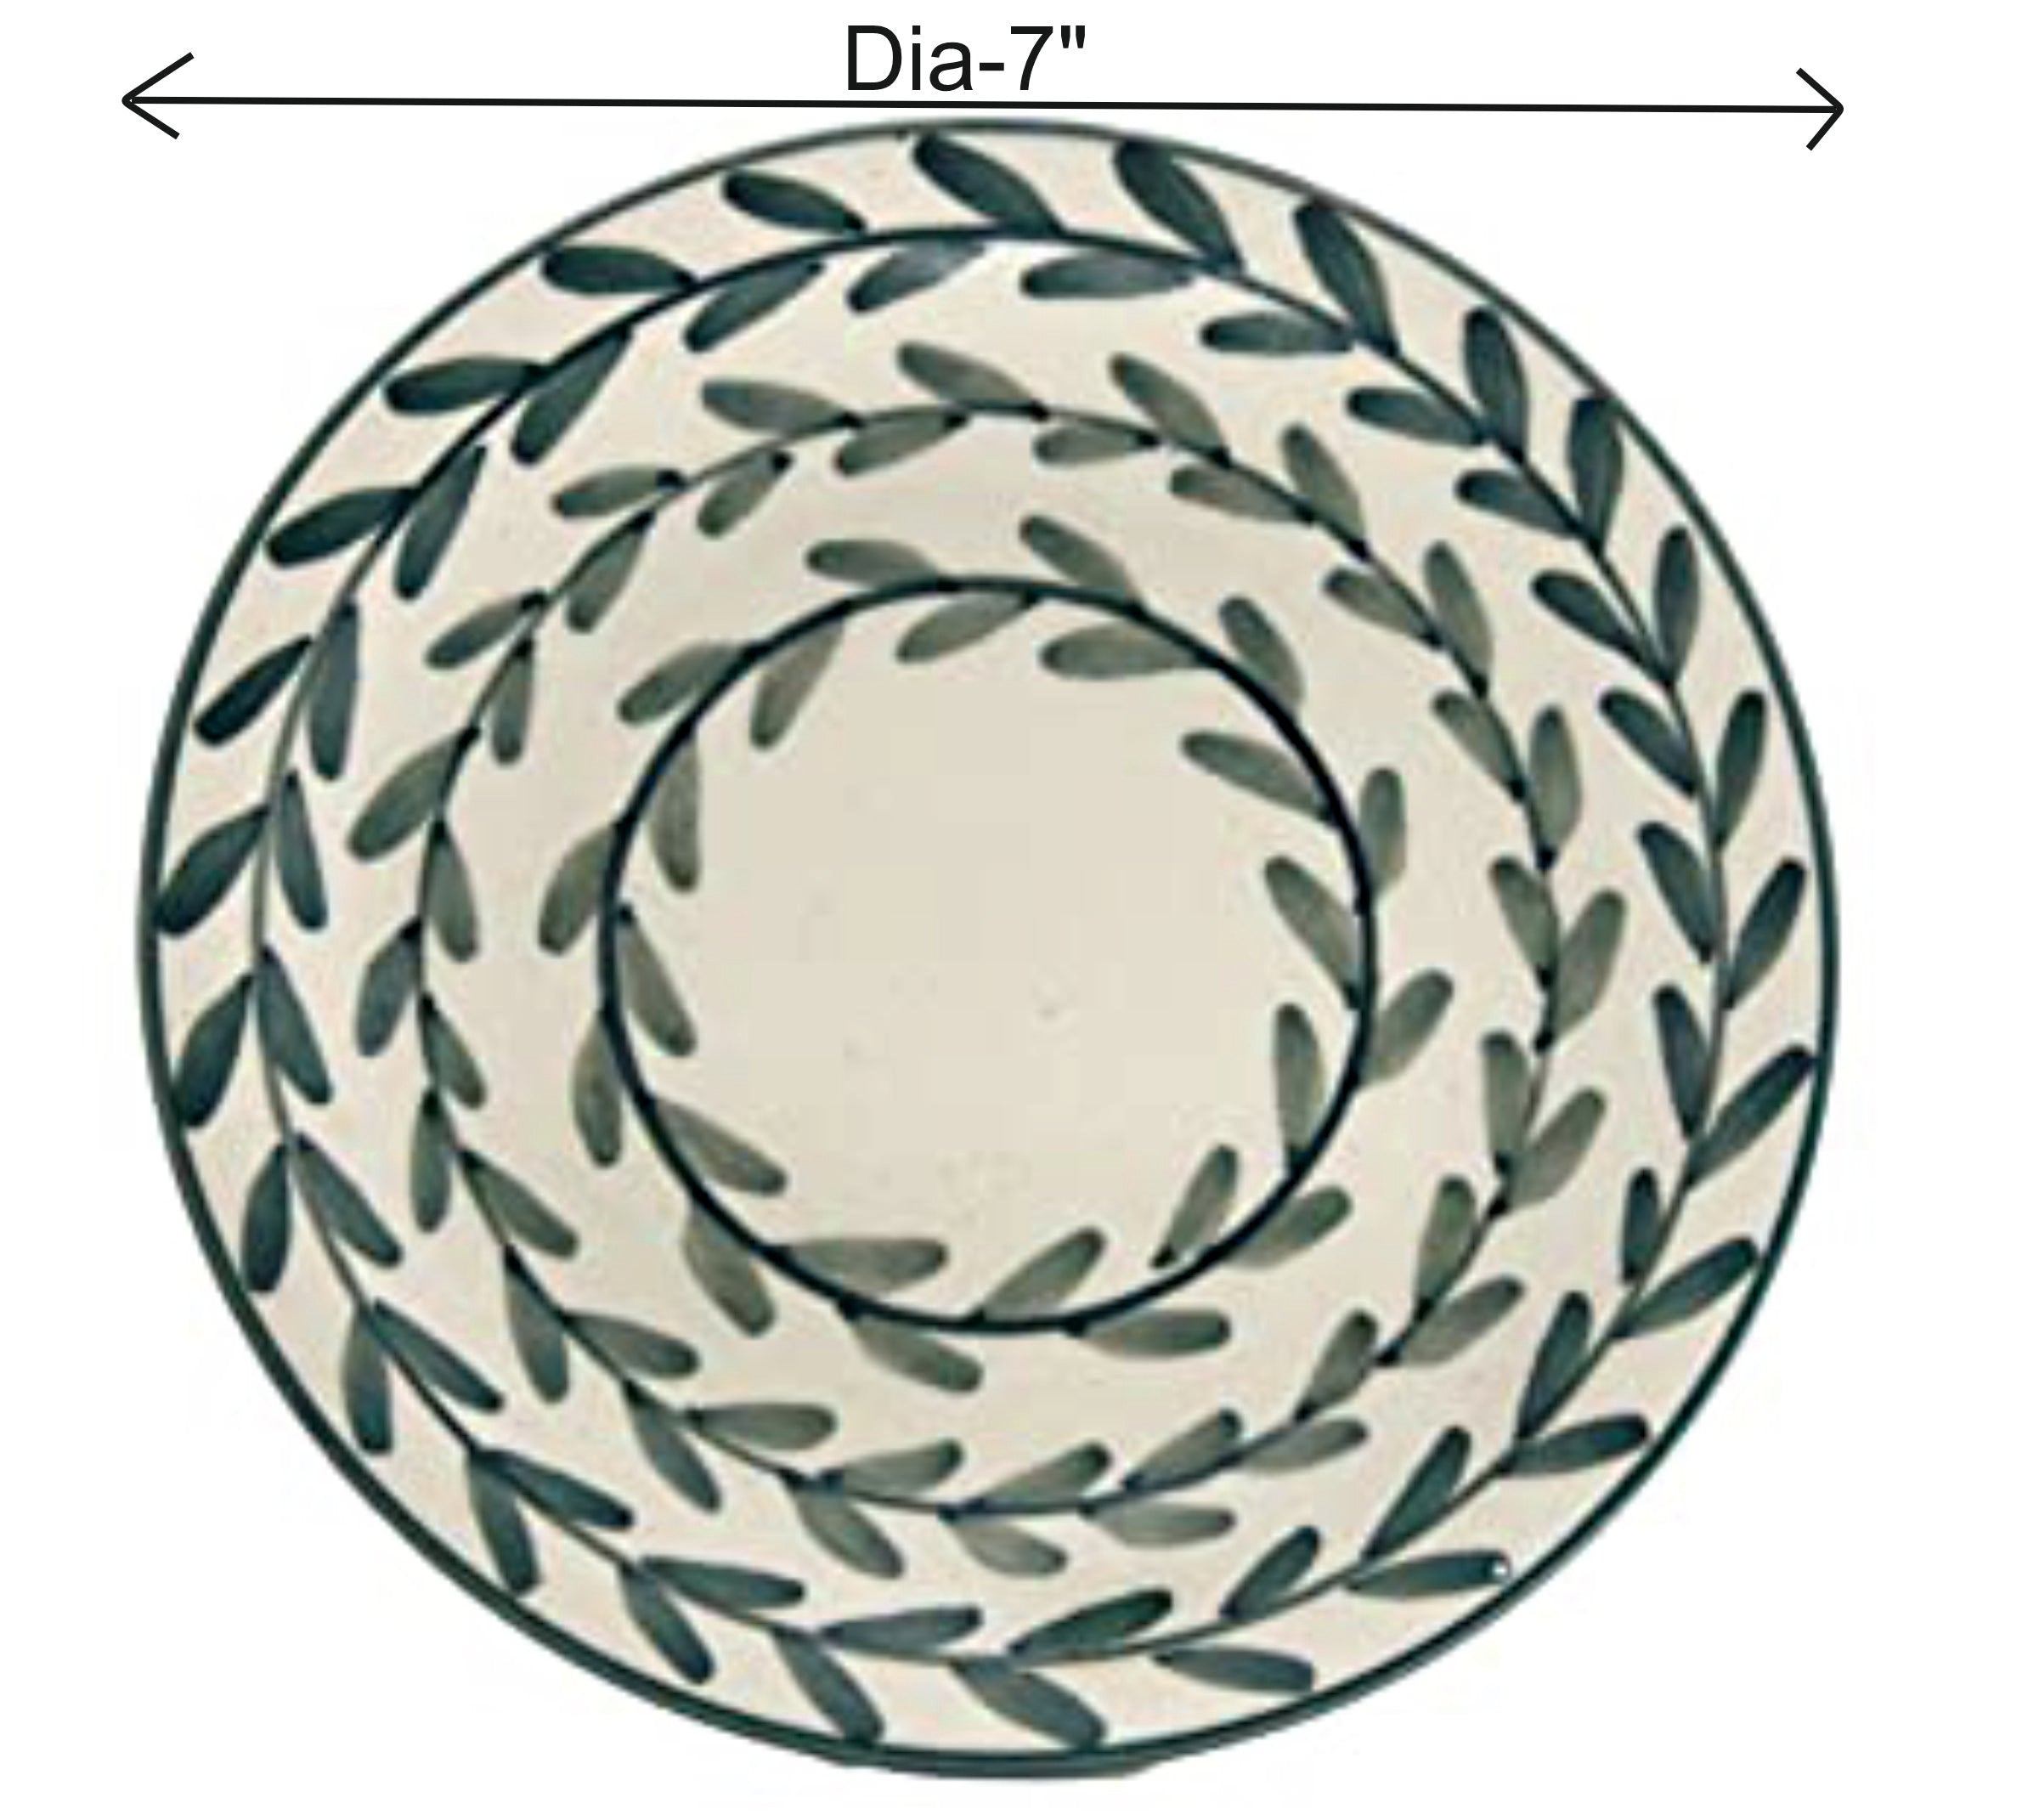 Twig – Handmade Ceramic Plates – 1Pc